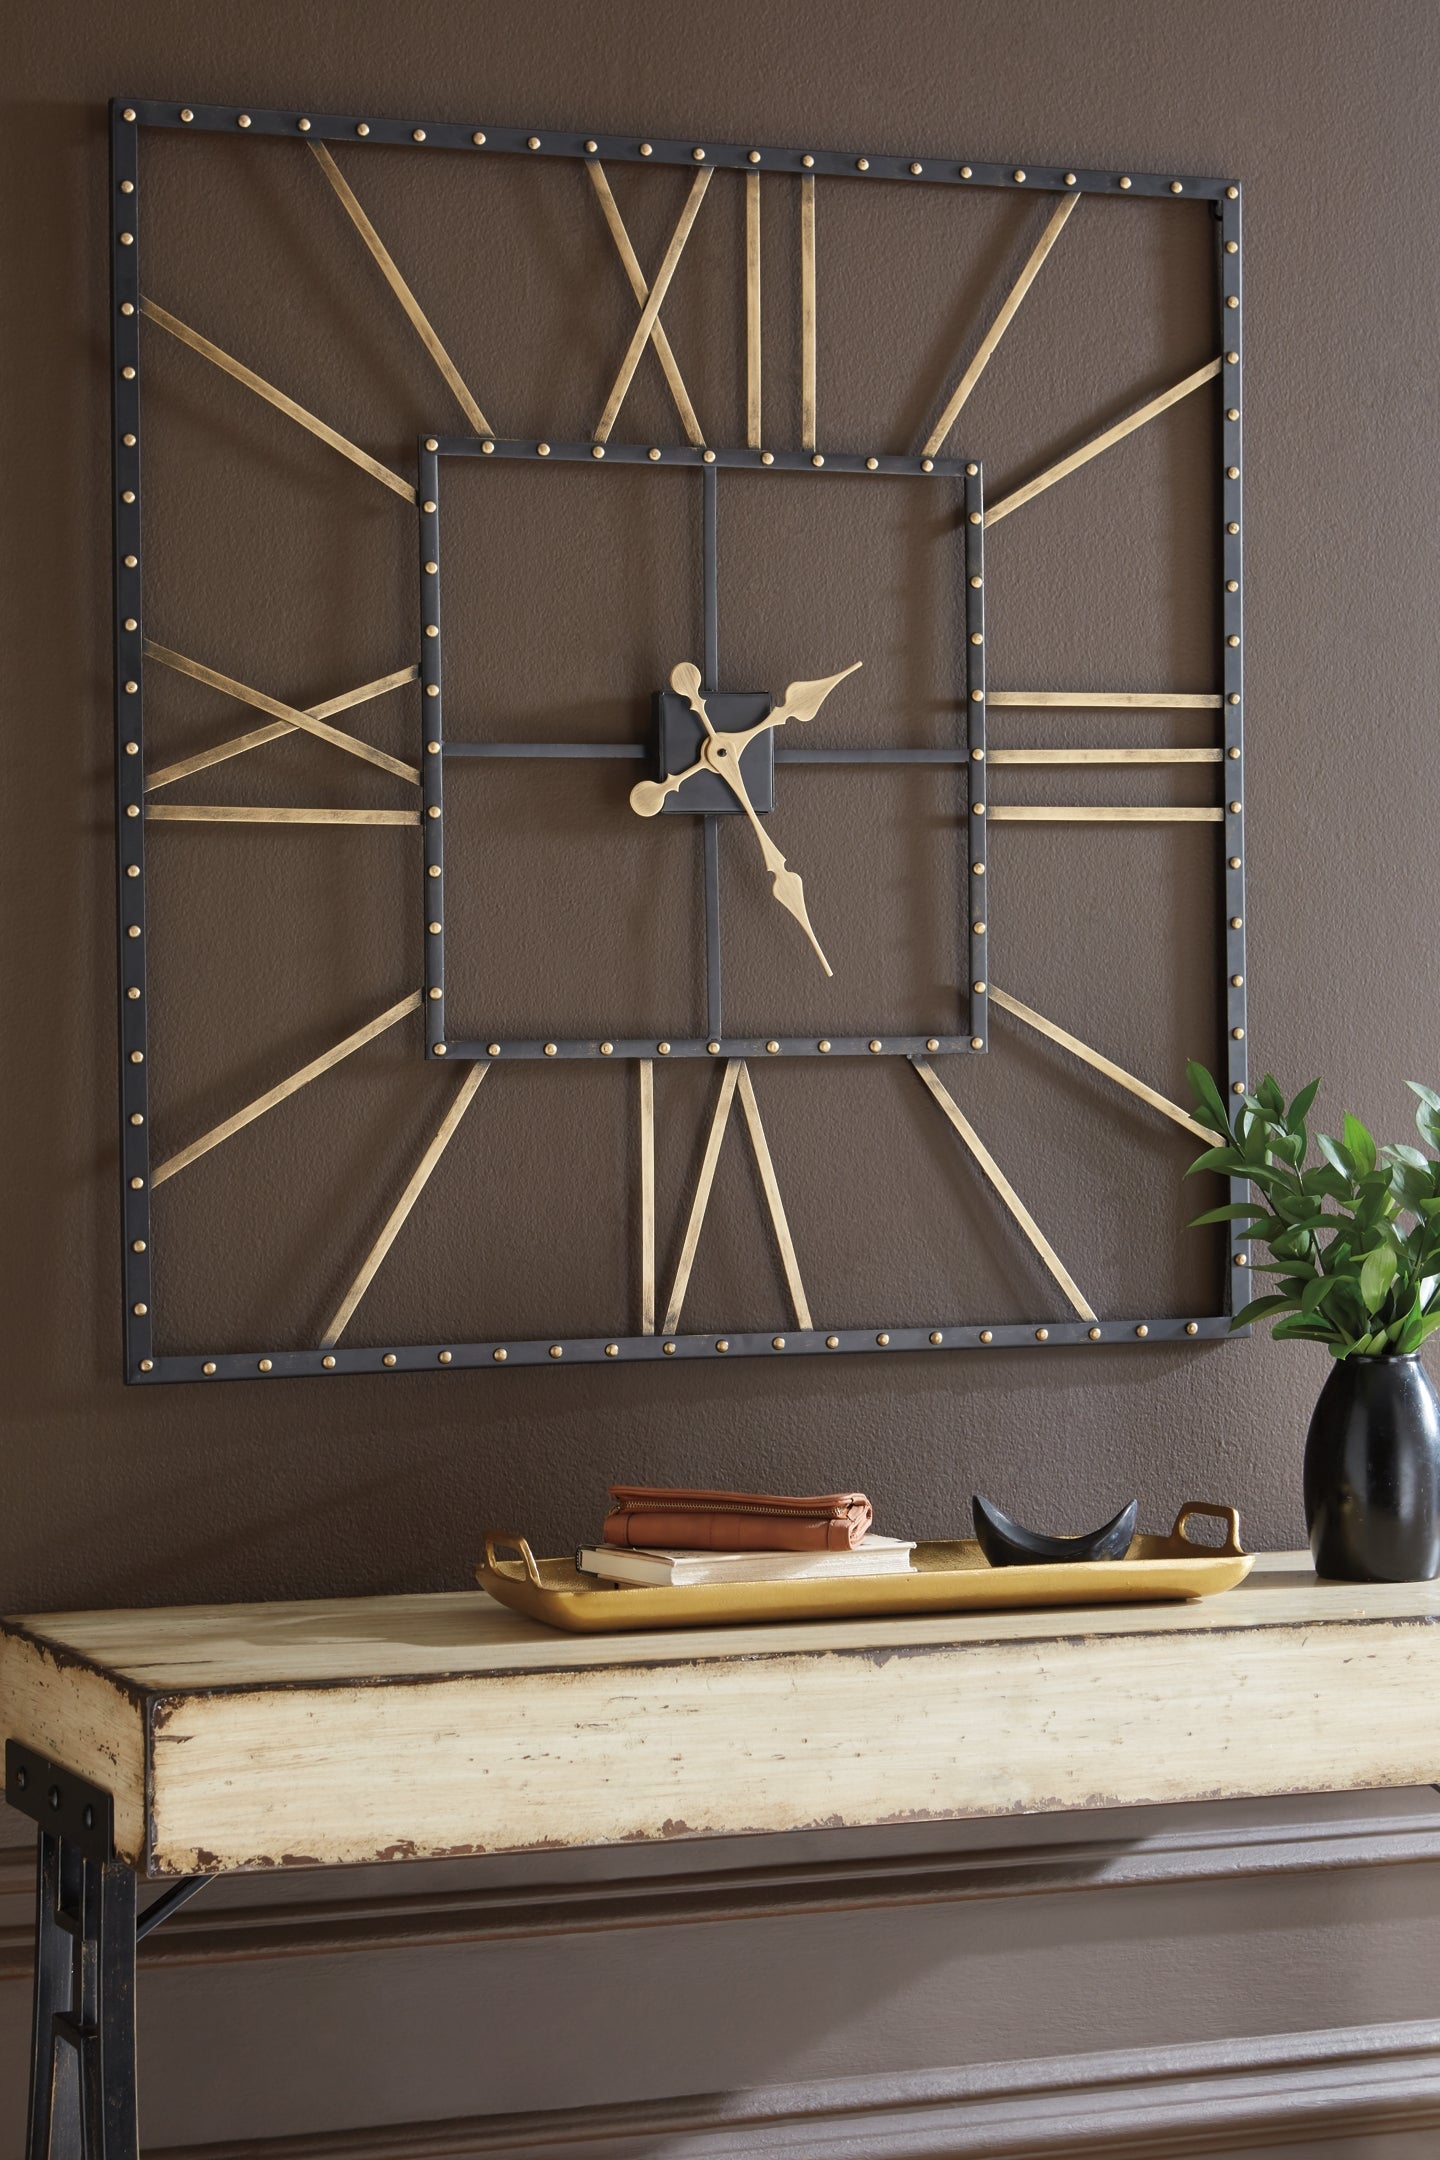 Thames Wall Clock at Cloud 9 Mattress & Furniture furniture, home furnishing, home decor